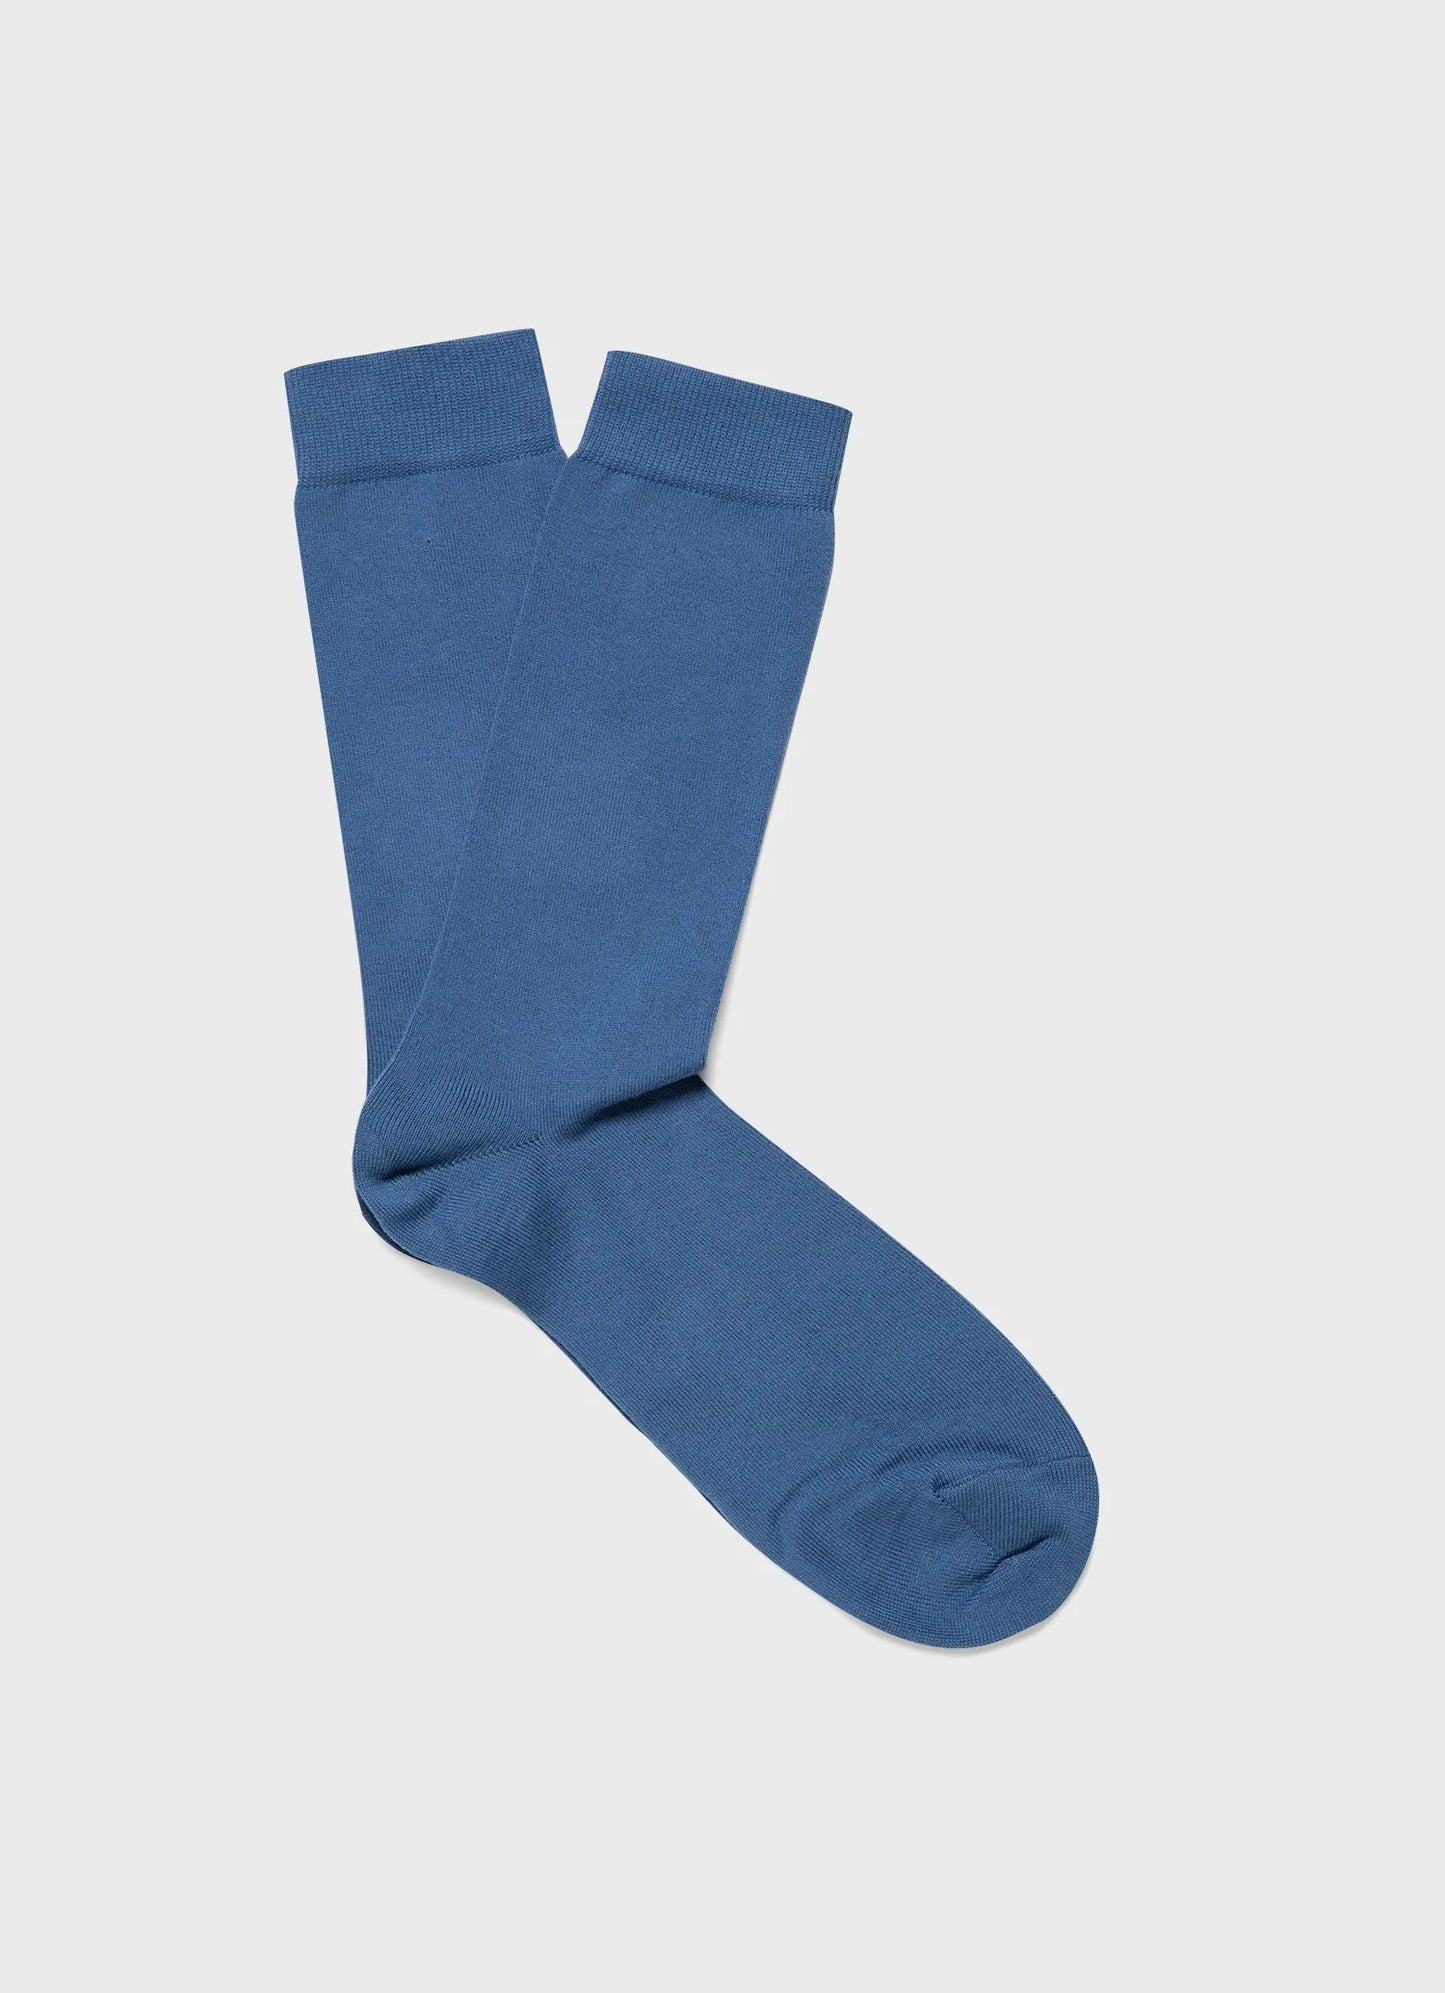 Long Staple Bluestone Cotton Socks